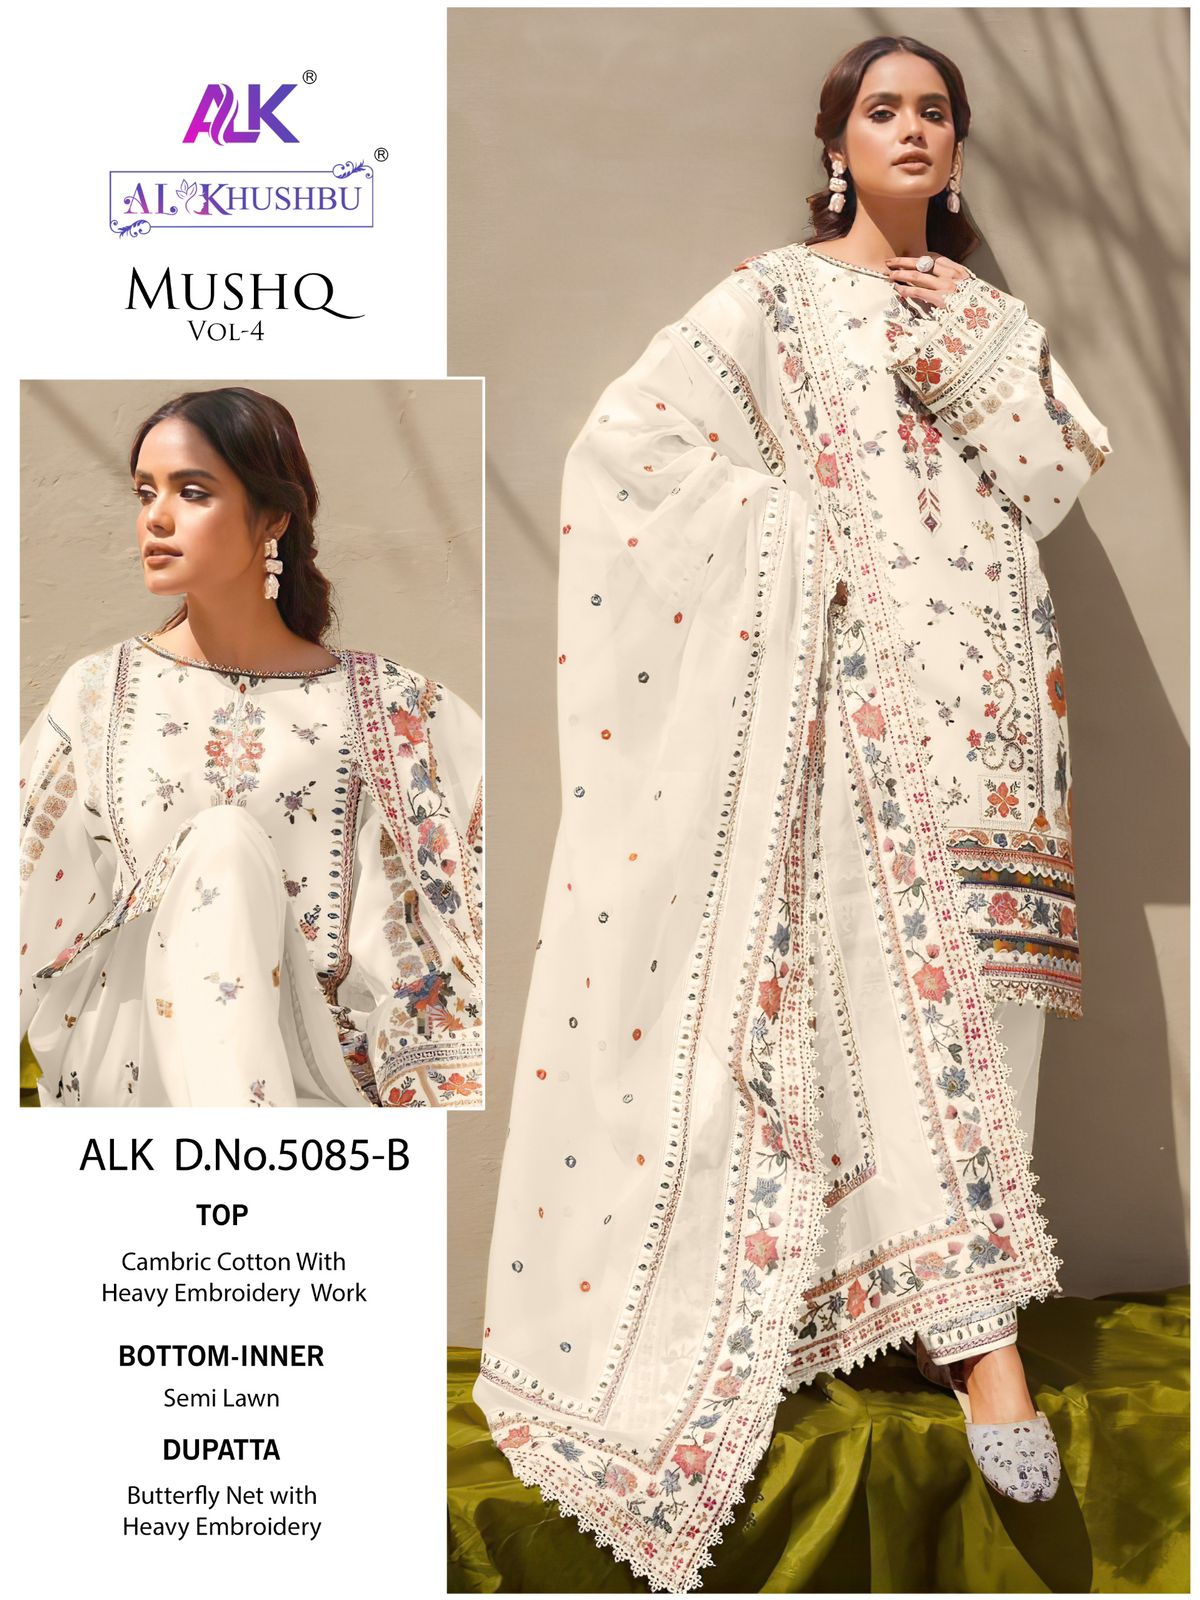 Mushq Vol 4-5085 Alk Cambric Cotton Pakistani Salwar Suits